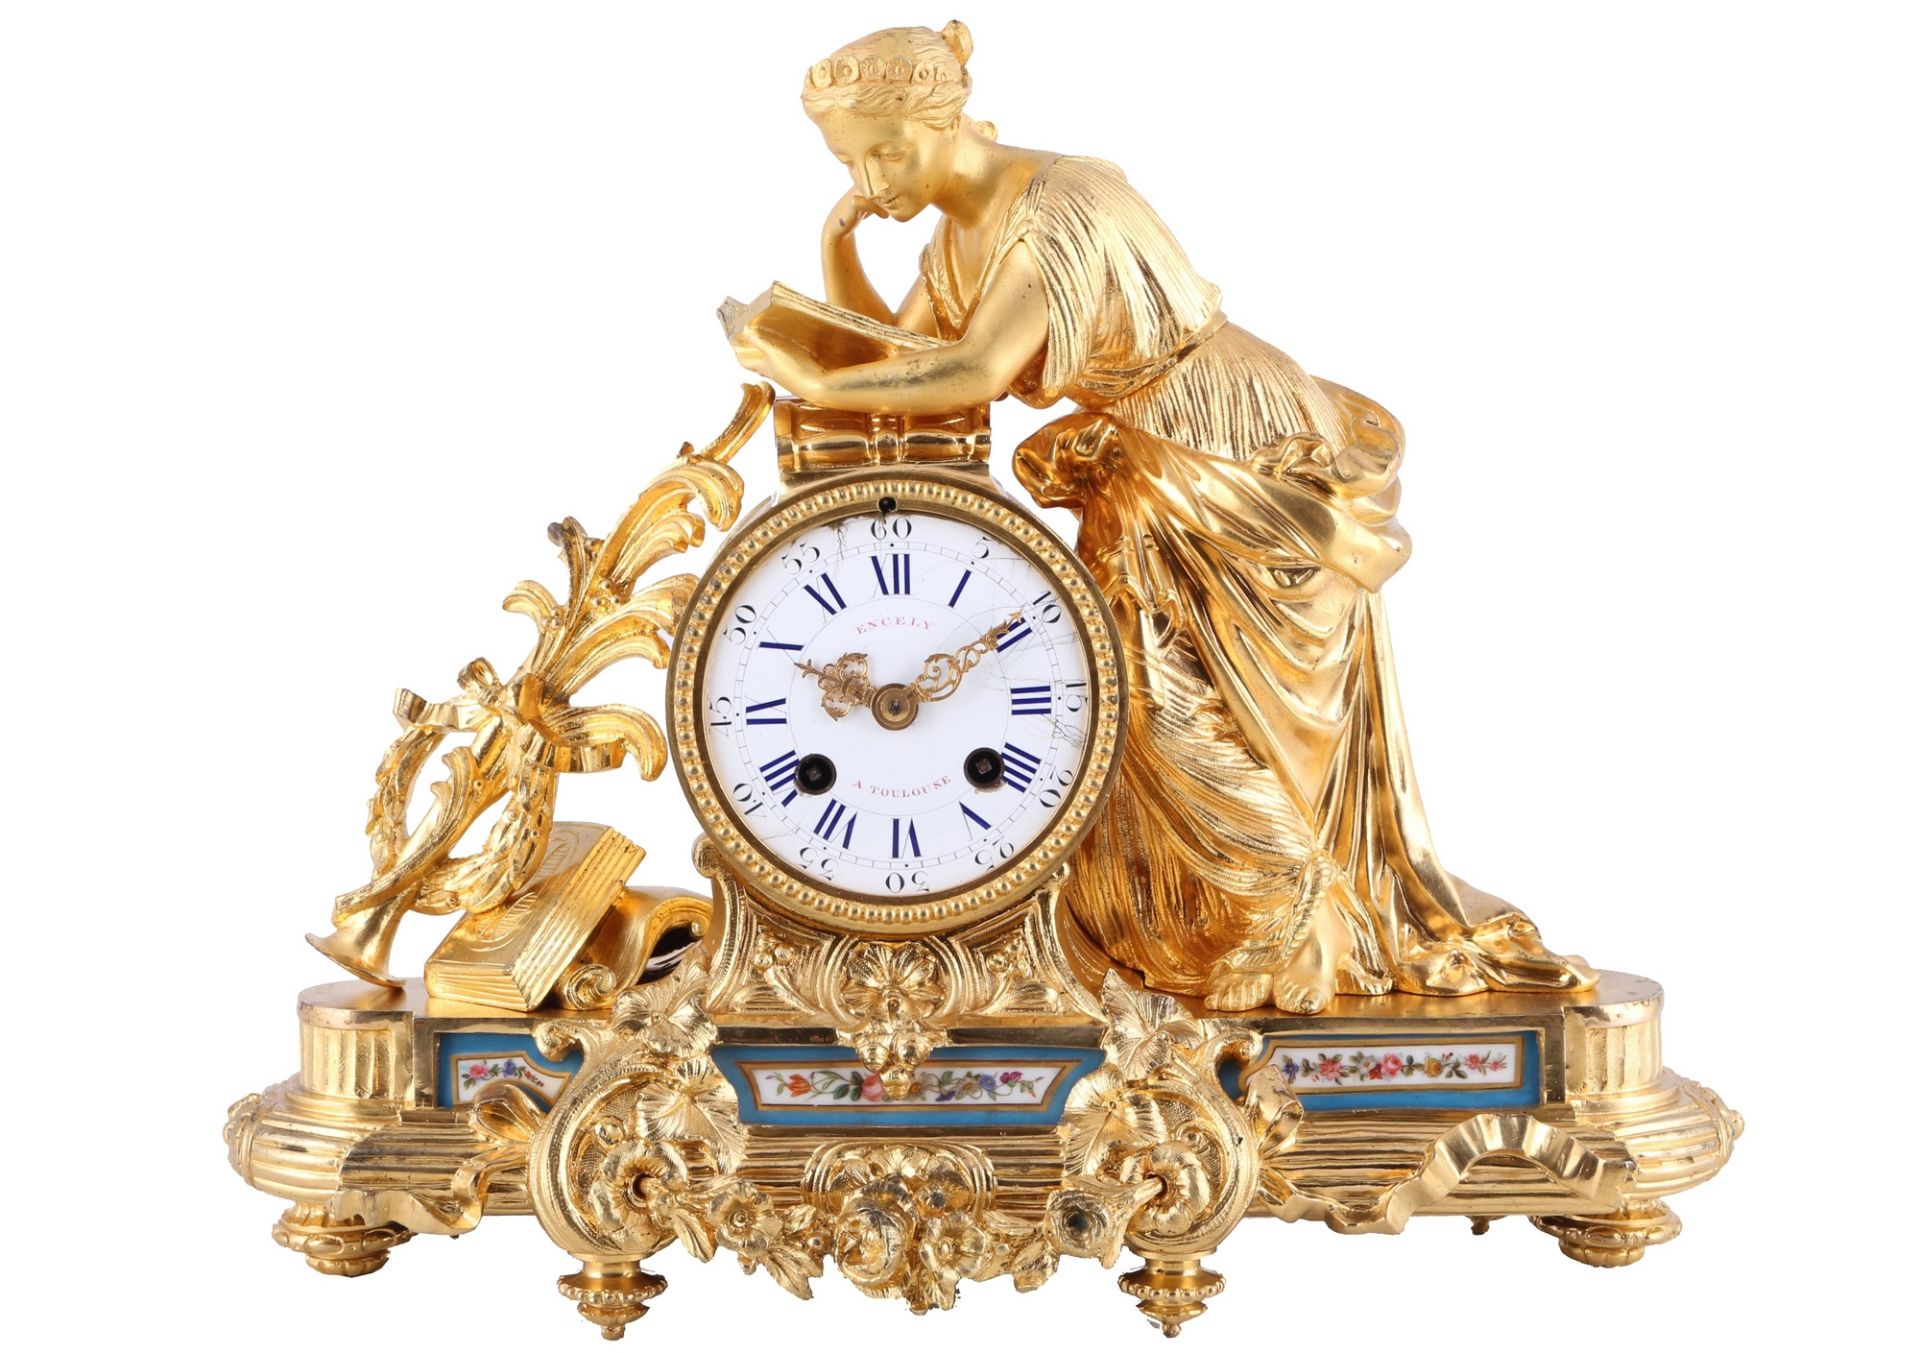 Kaminuhr Bronze 19. Jahrhundert, french bonze mantel clock 19th century,